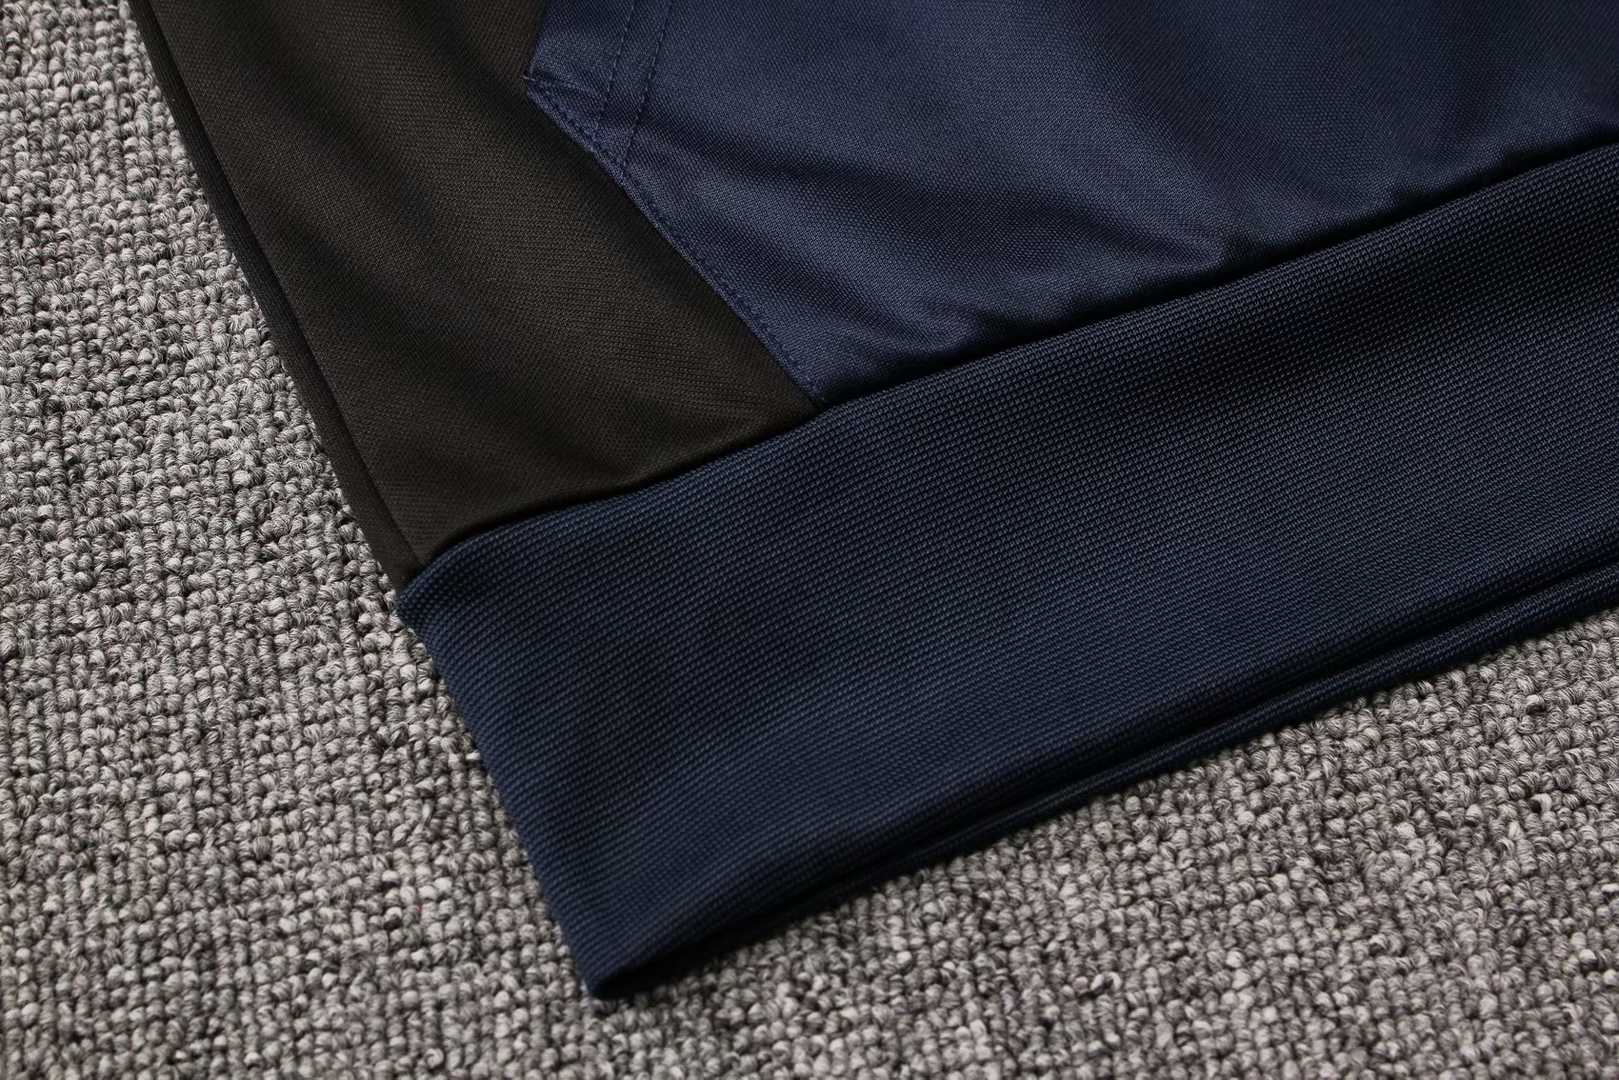 2019/20 PSG Hoodie Black Mens Soccer Training Suit(SweatJersey + Pants)